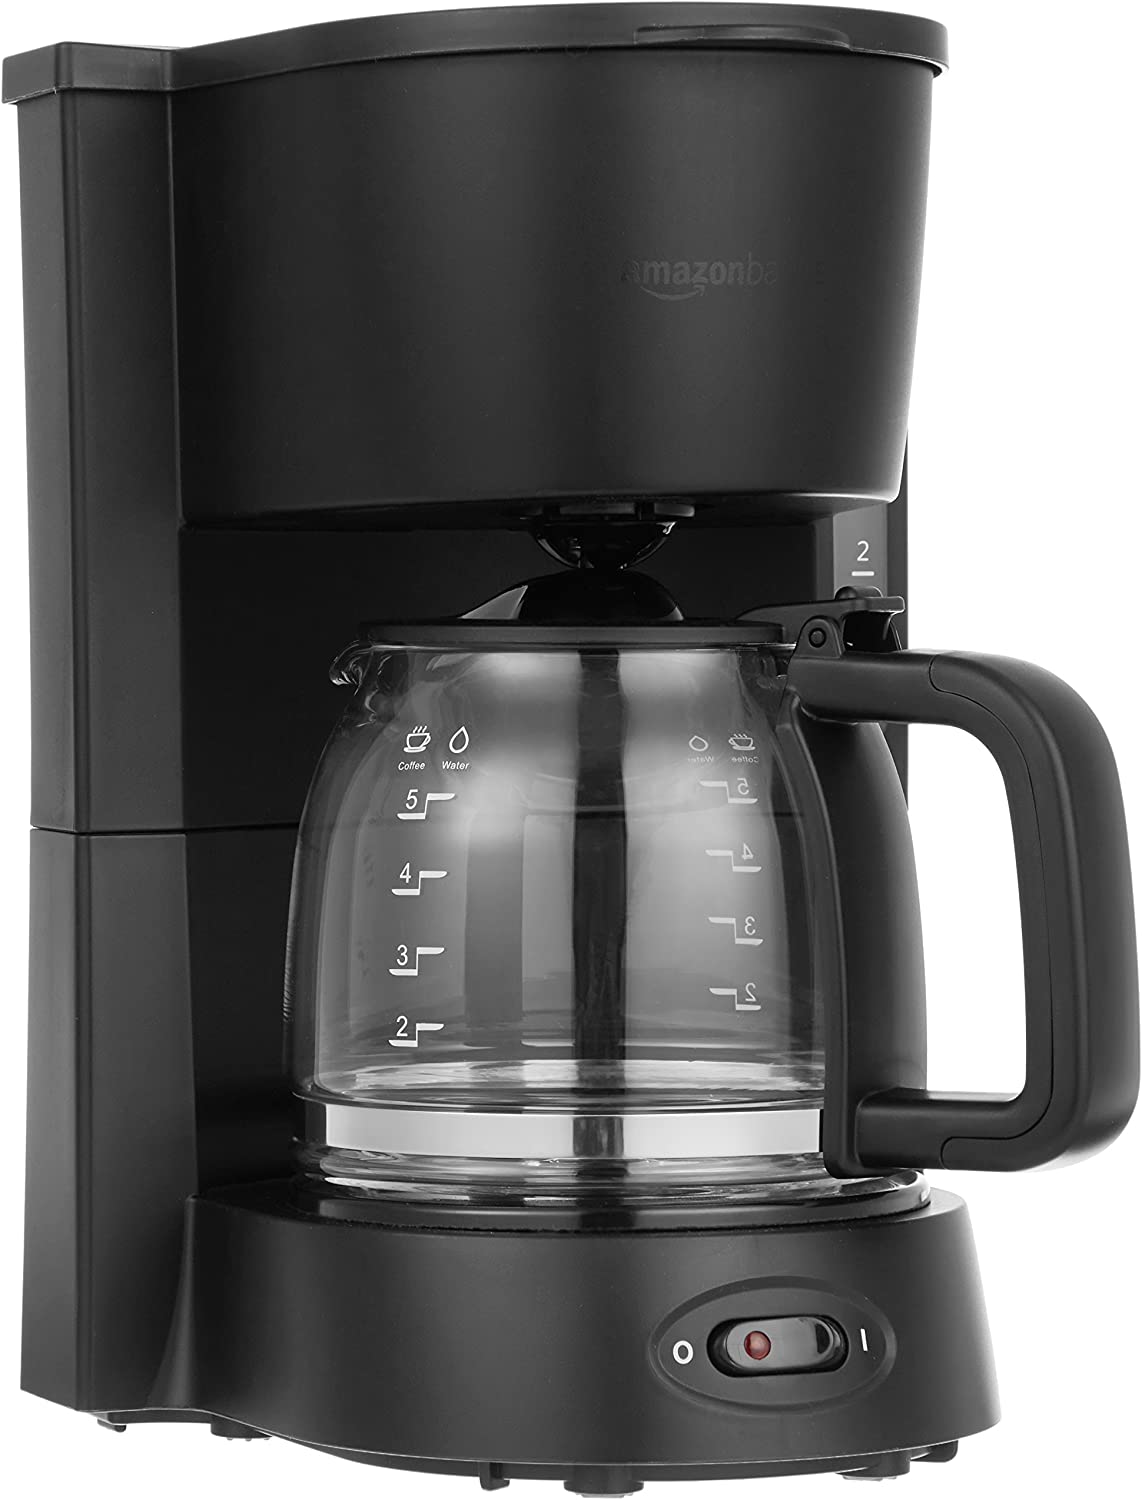 Amazon Basics 5-Cup (25 Oz) Coffeemaker